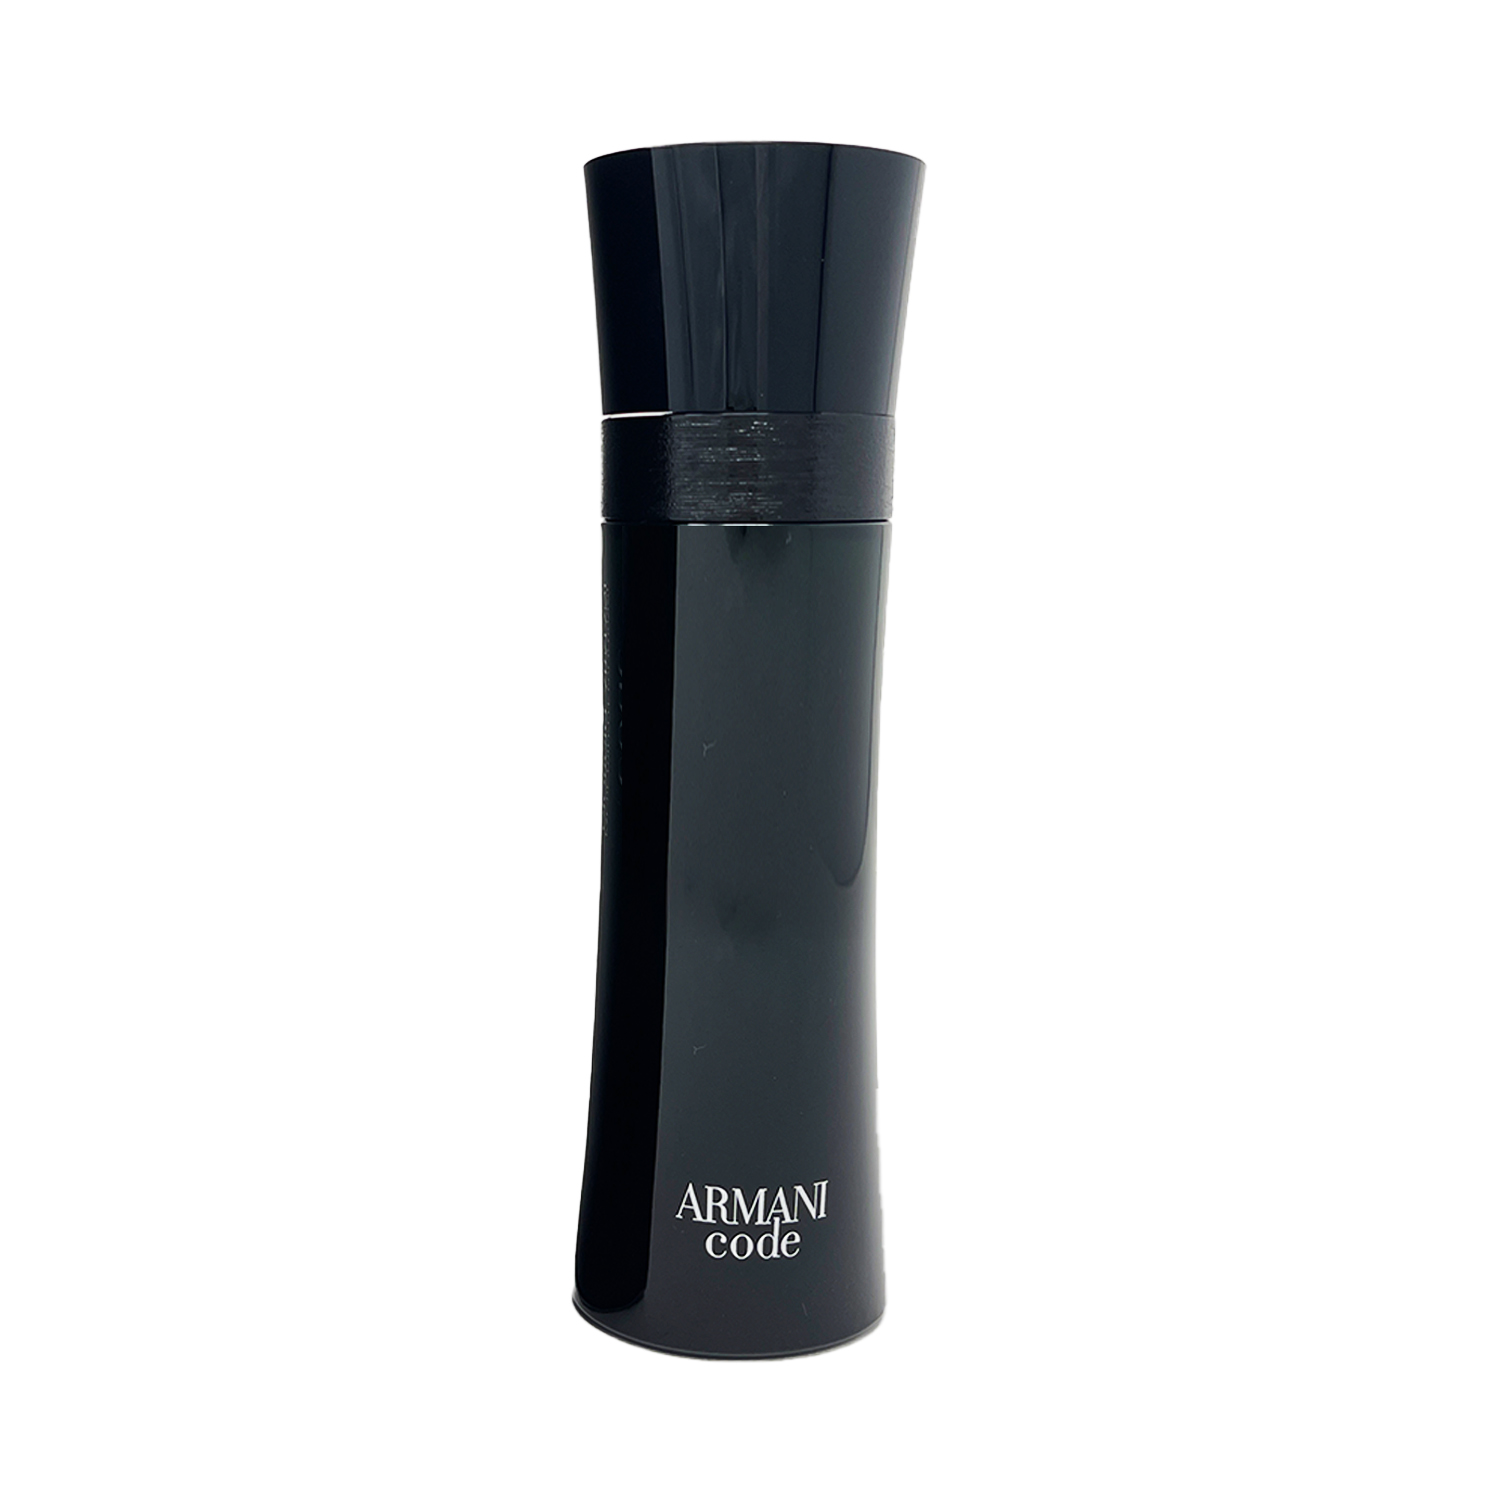 Giorgio Armani Code Eau de Toilette, Perfume for Women, 4.2 Oz Full Size - image 3 of 4